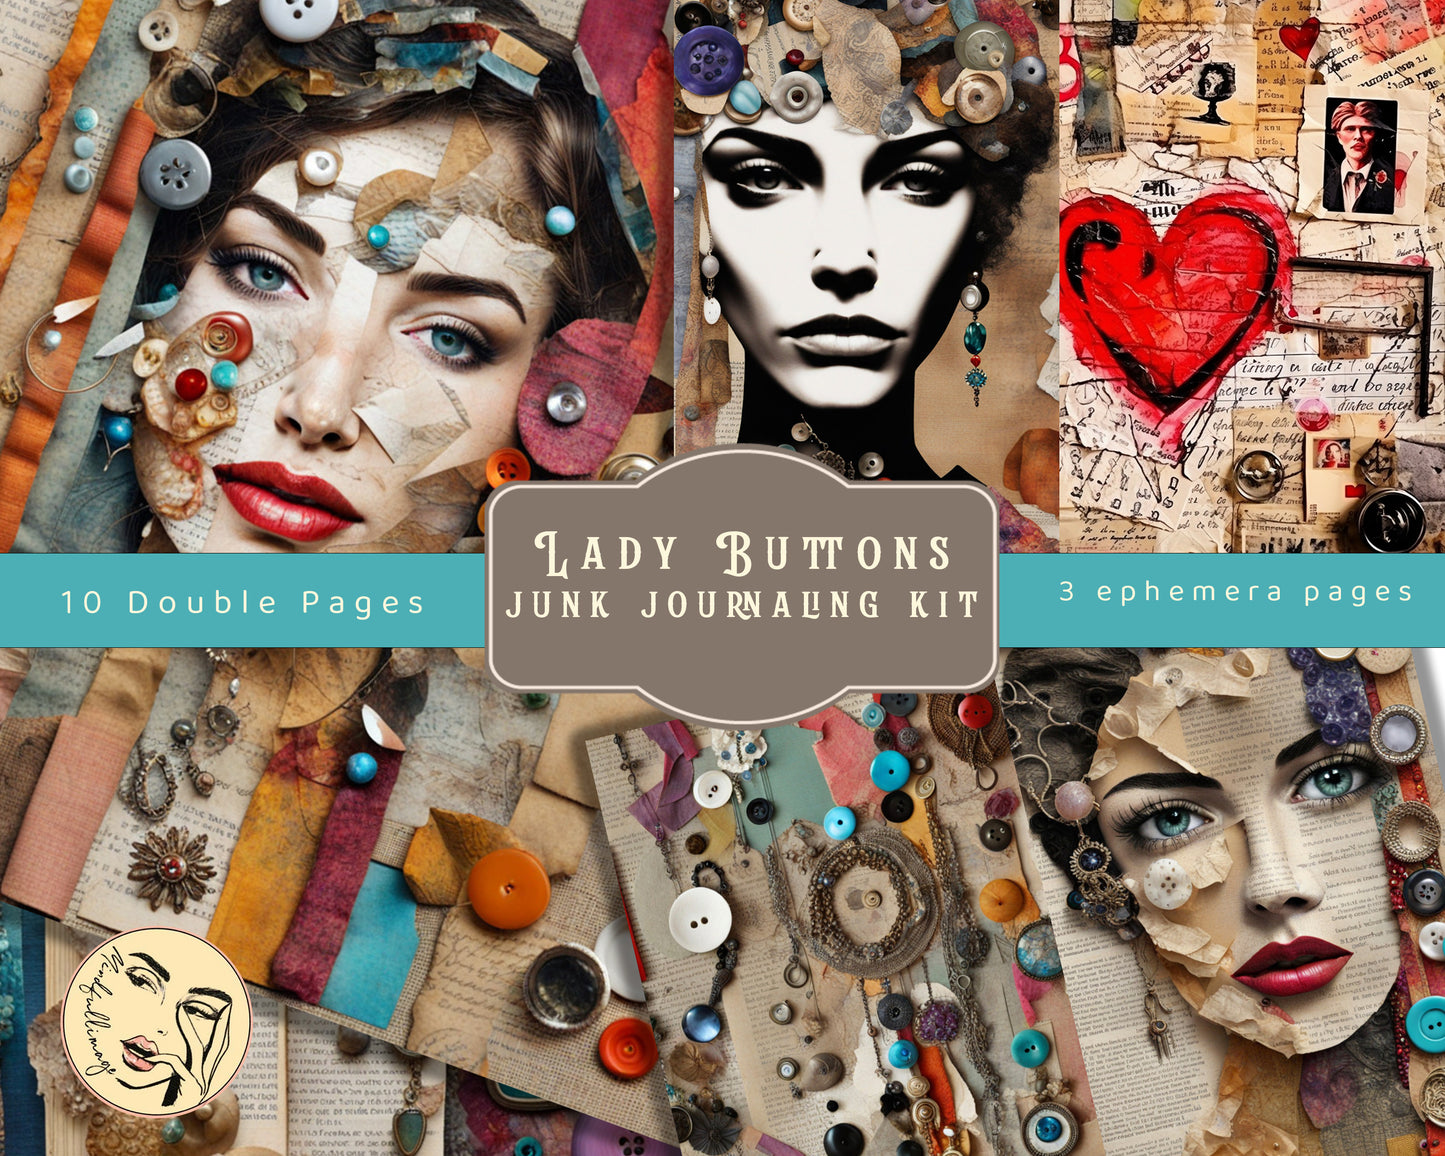 Lady Buttons Junk Journaling Kit